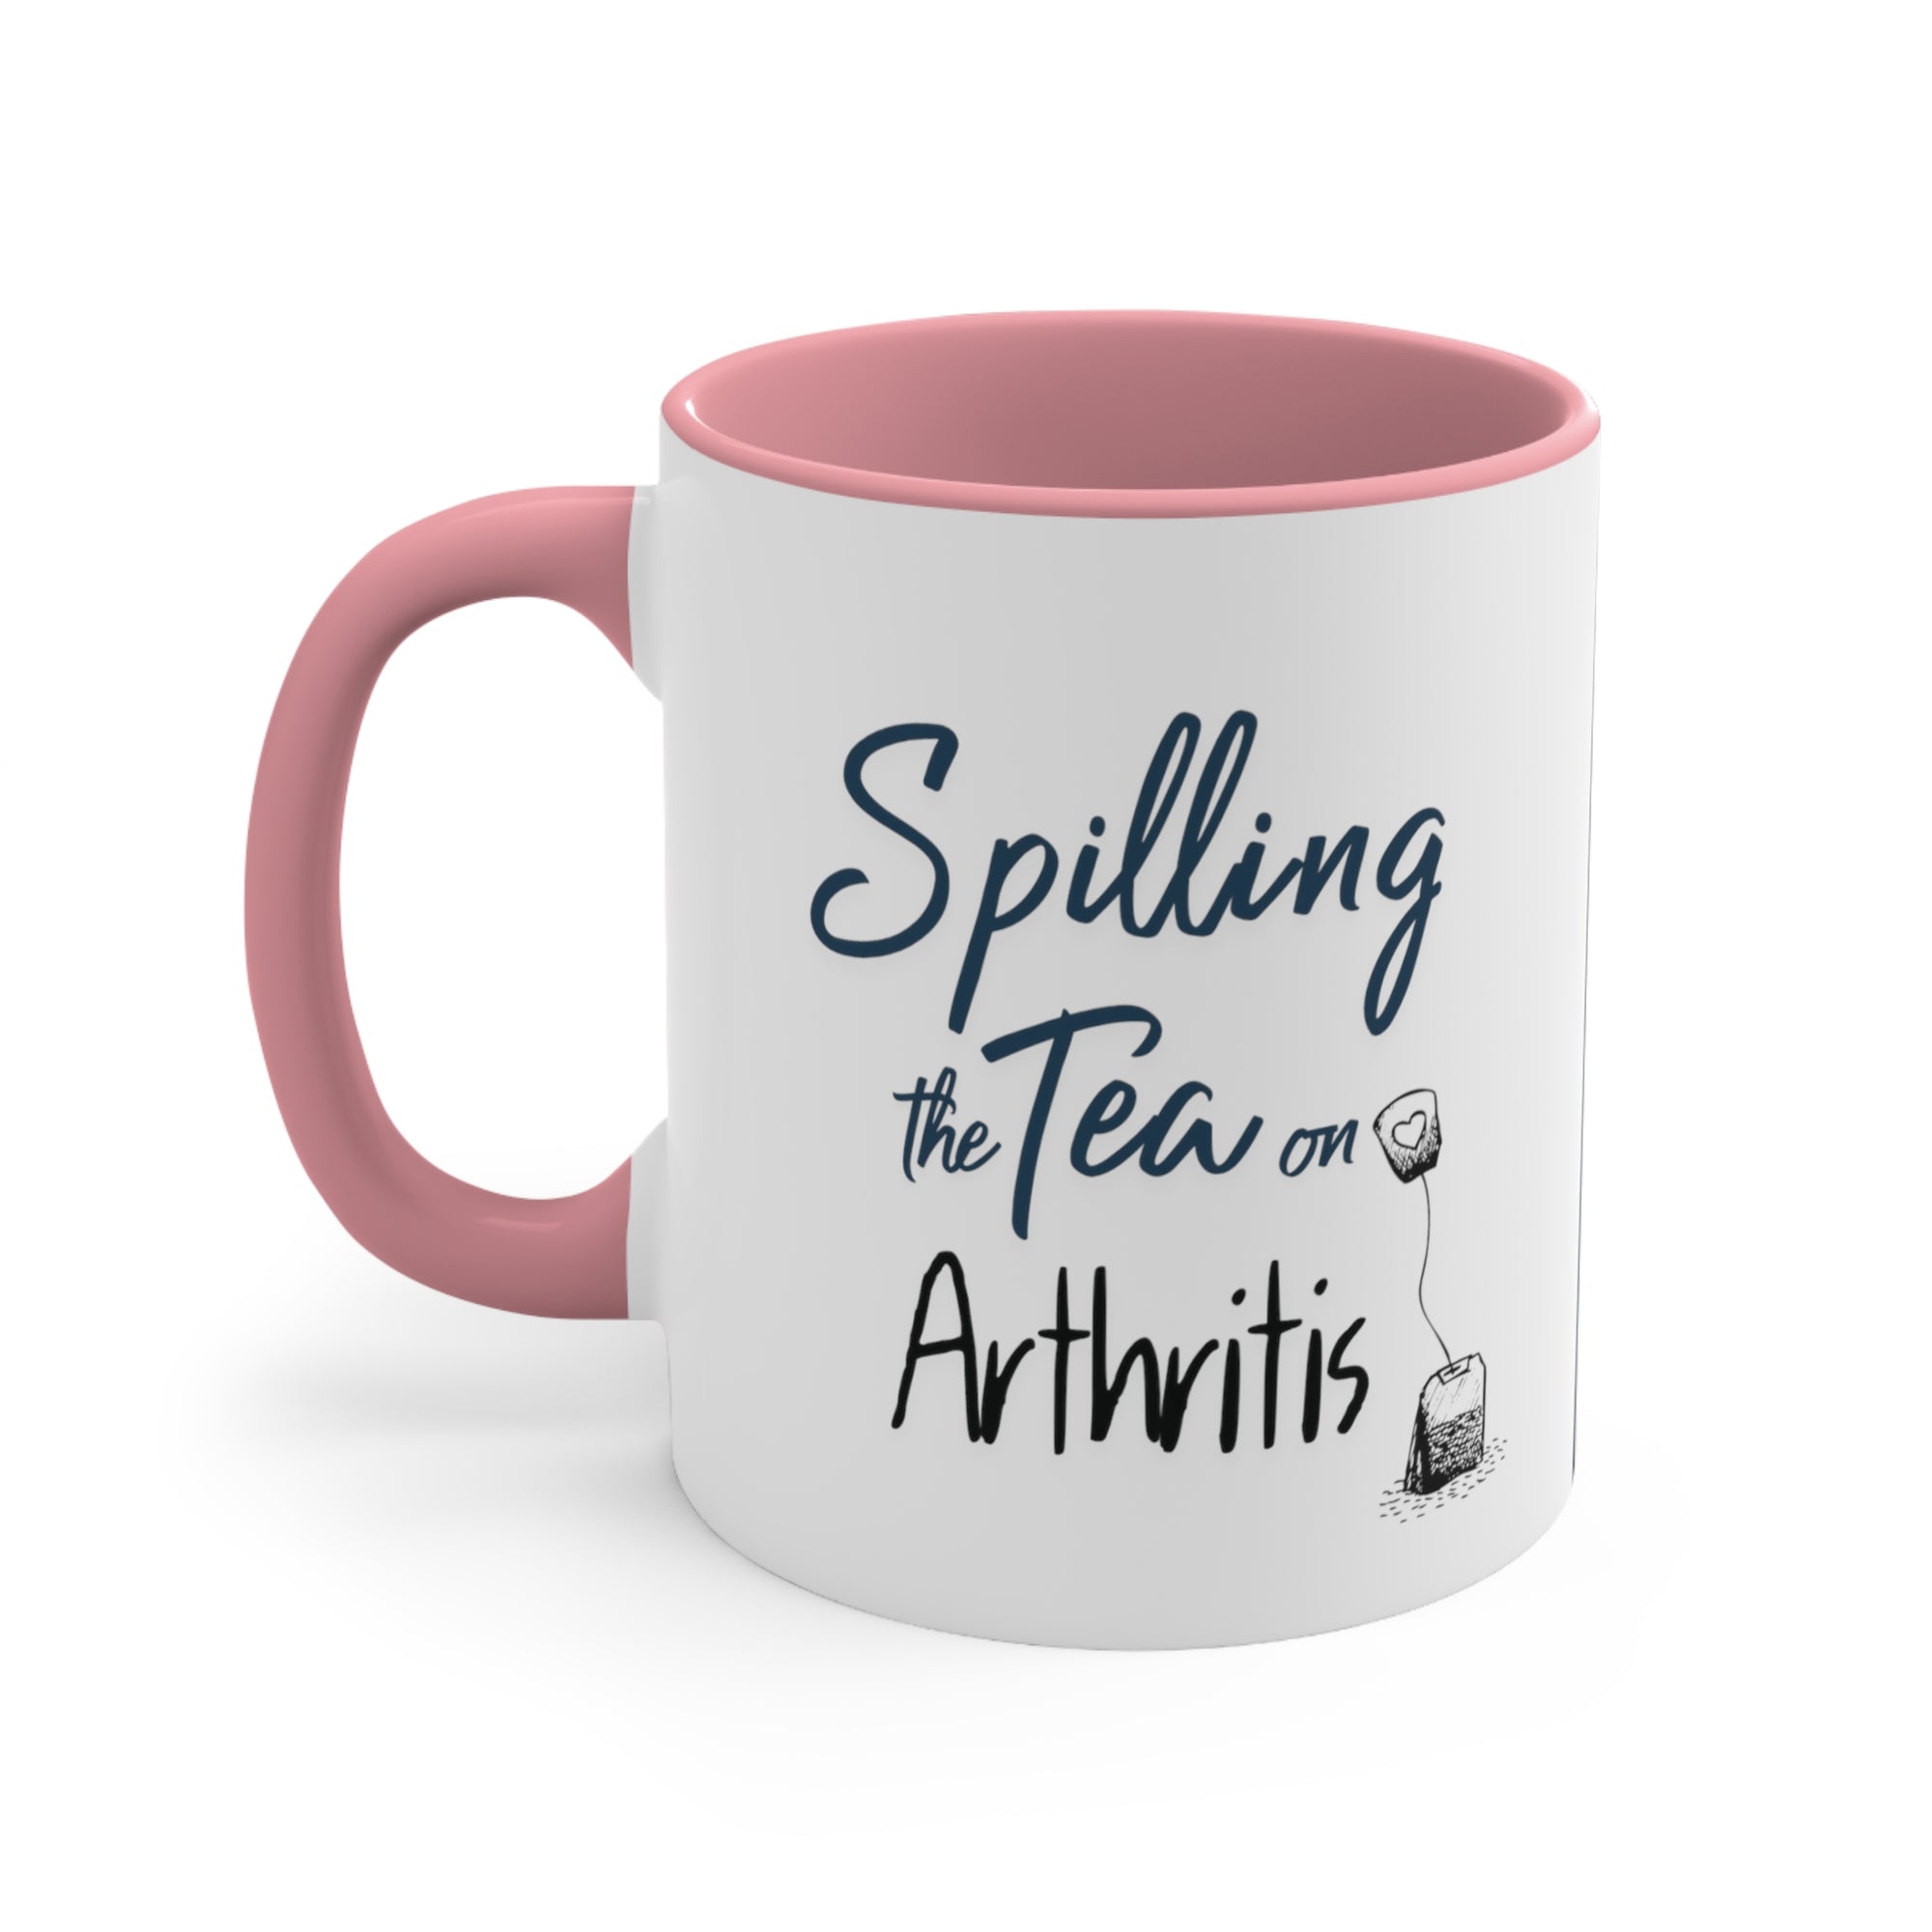 "Spilling the Tea on Arthritis" # 2 -11 oz. Two-Tone Mug